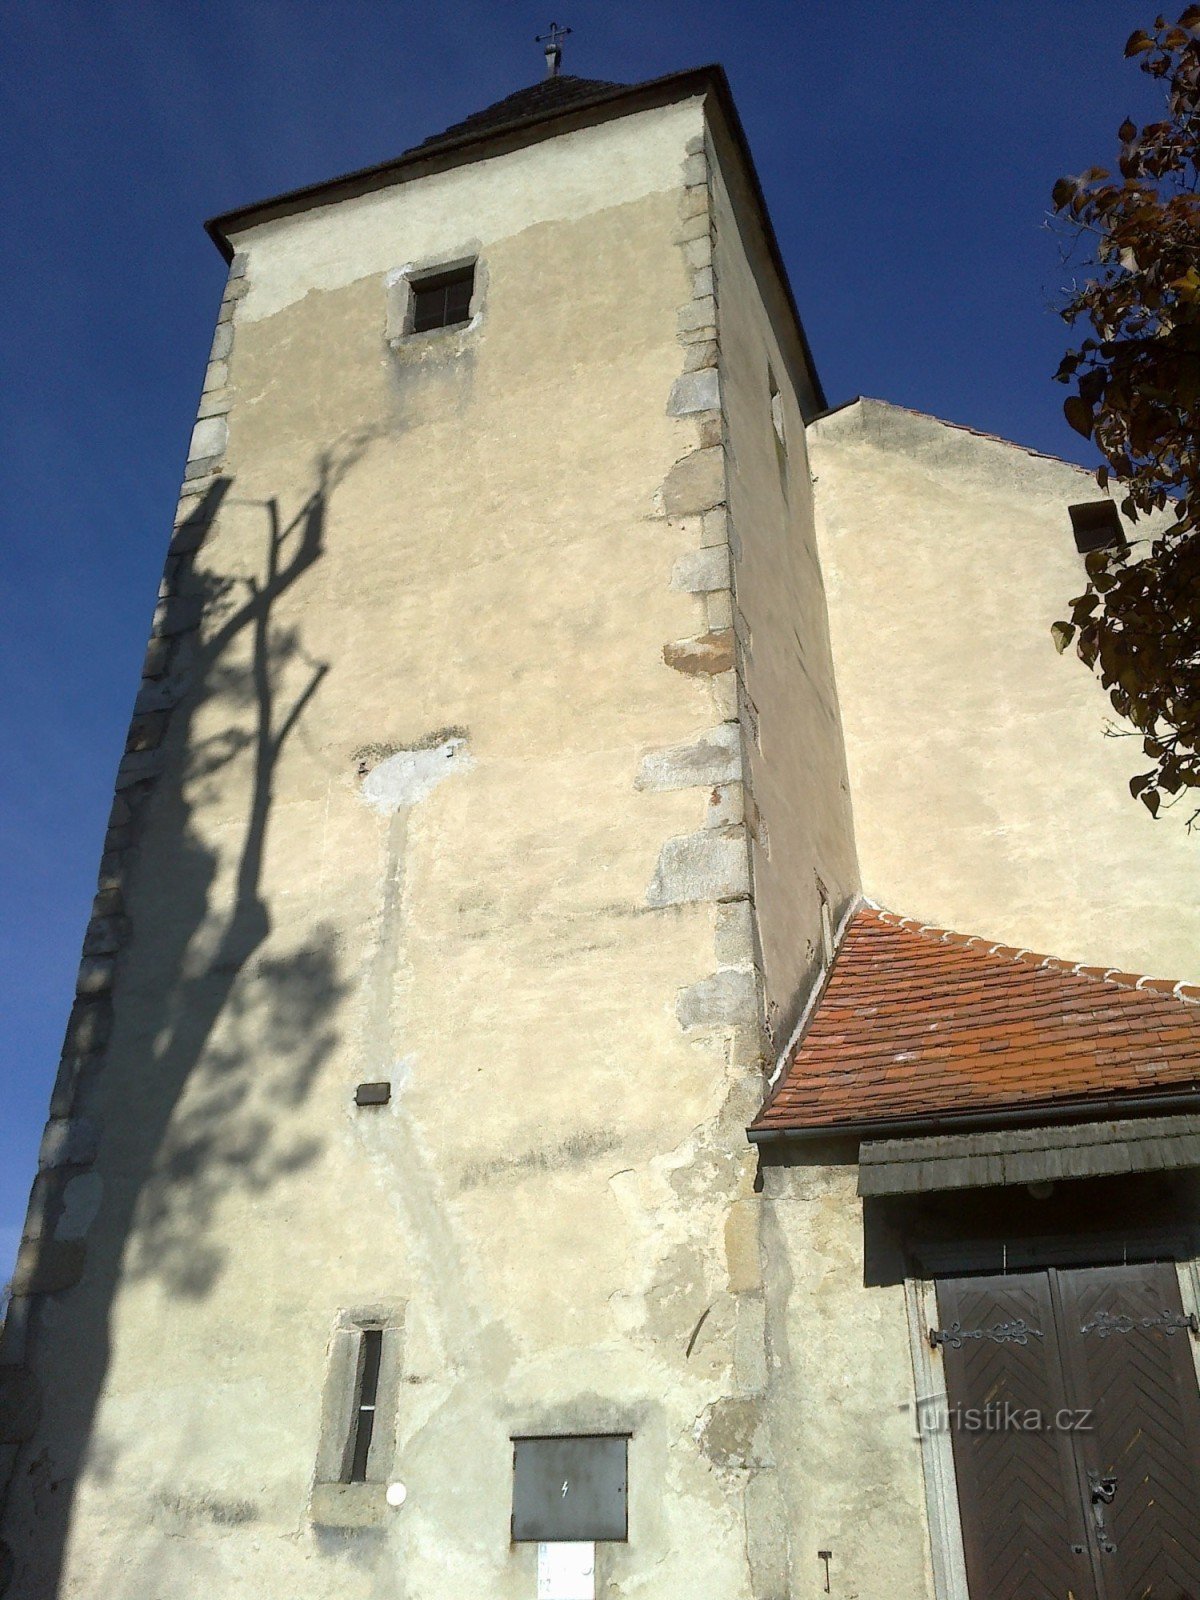 Wooden bell tower in Ježov.